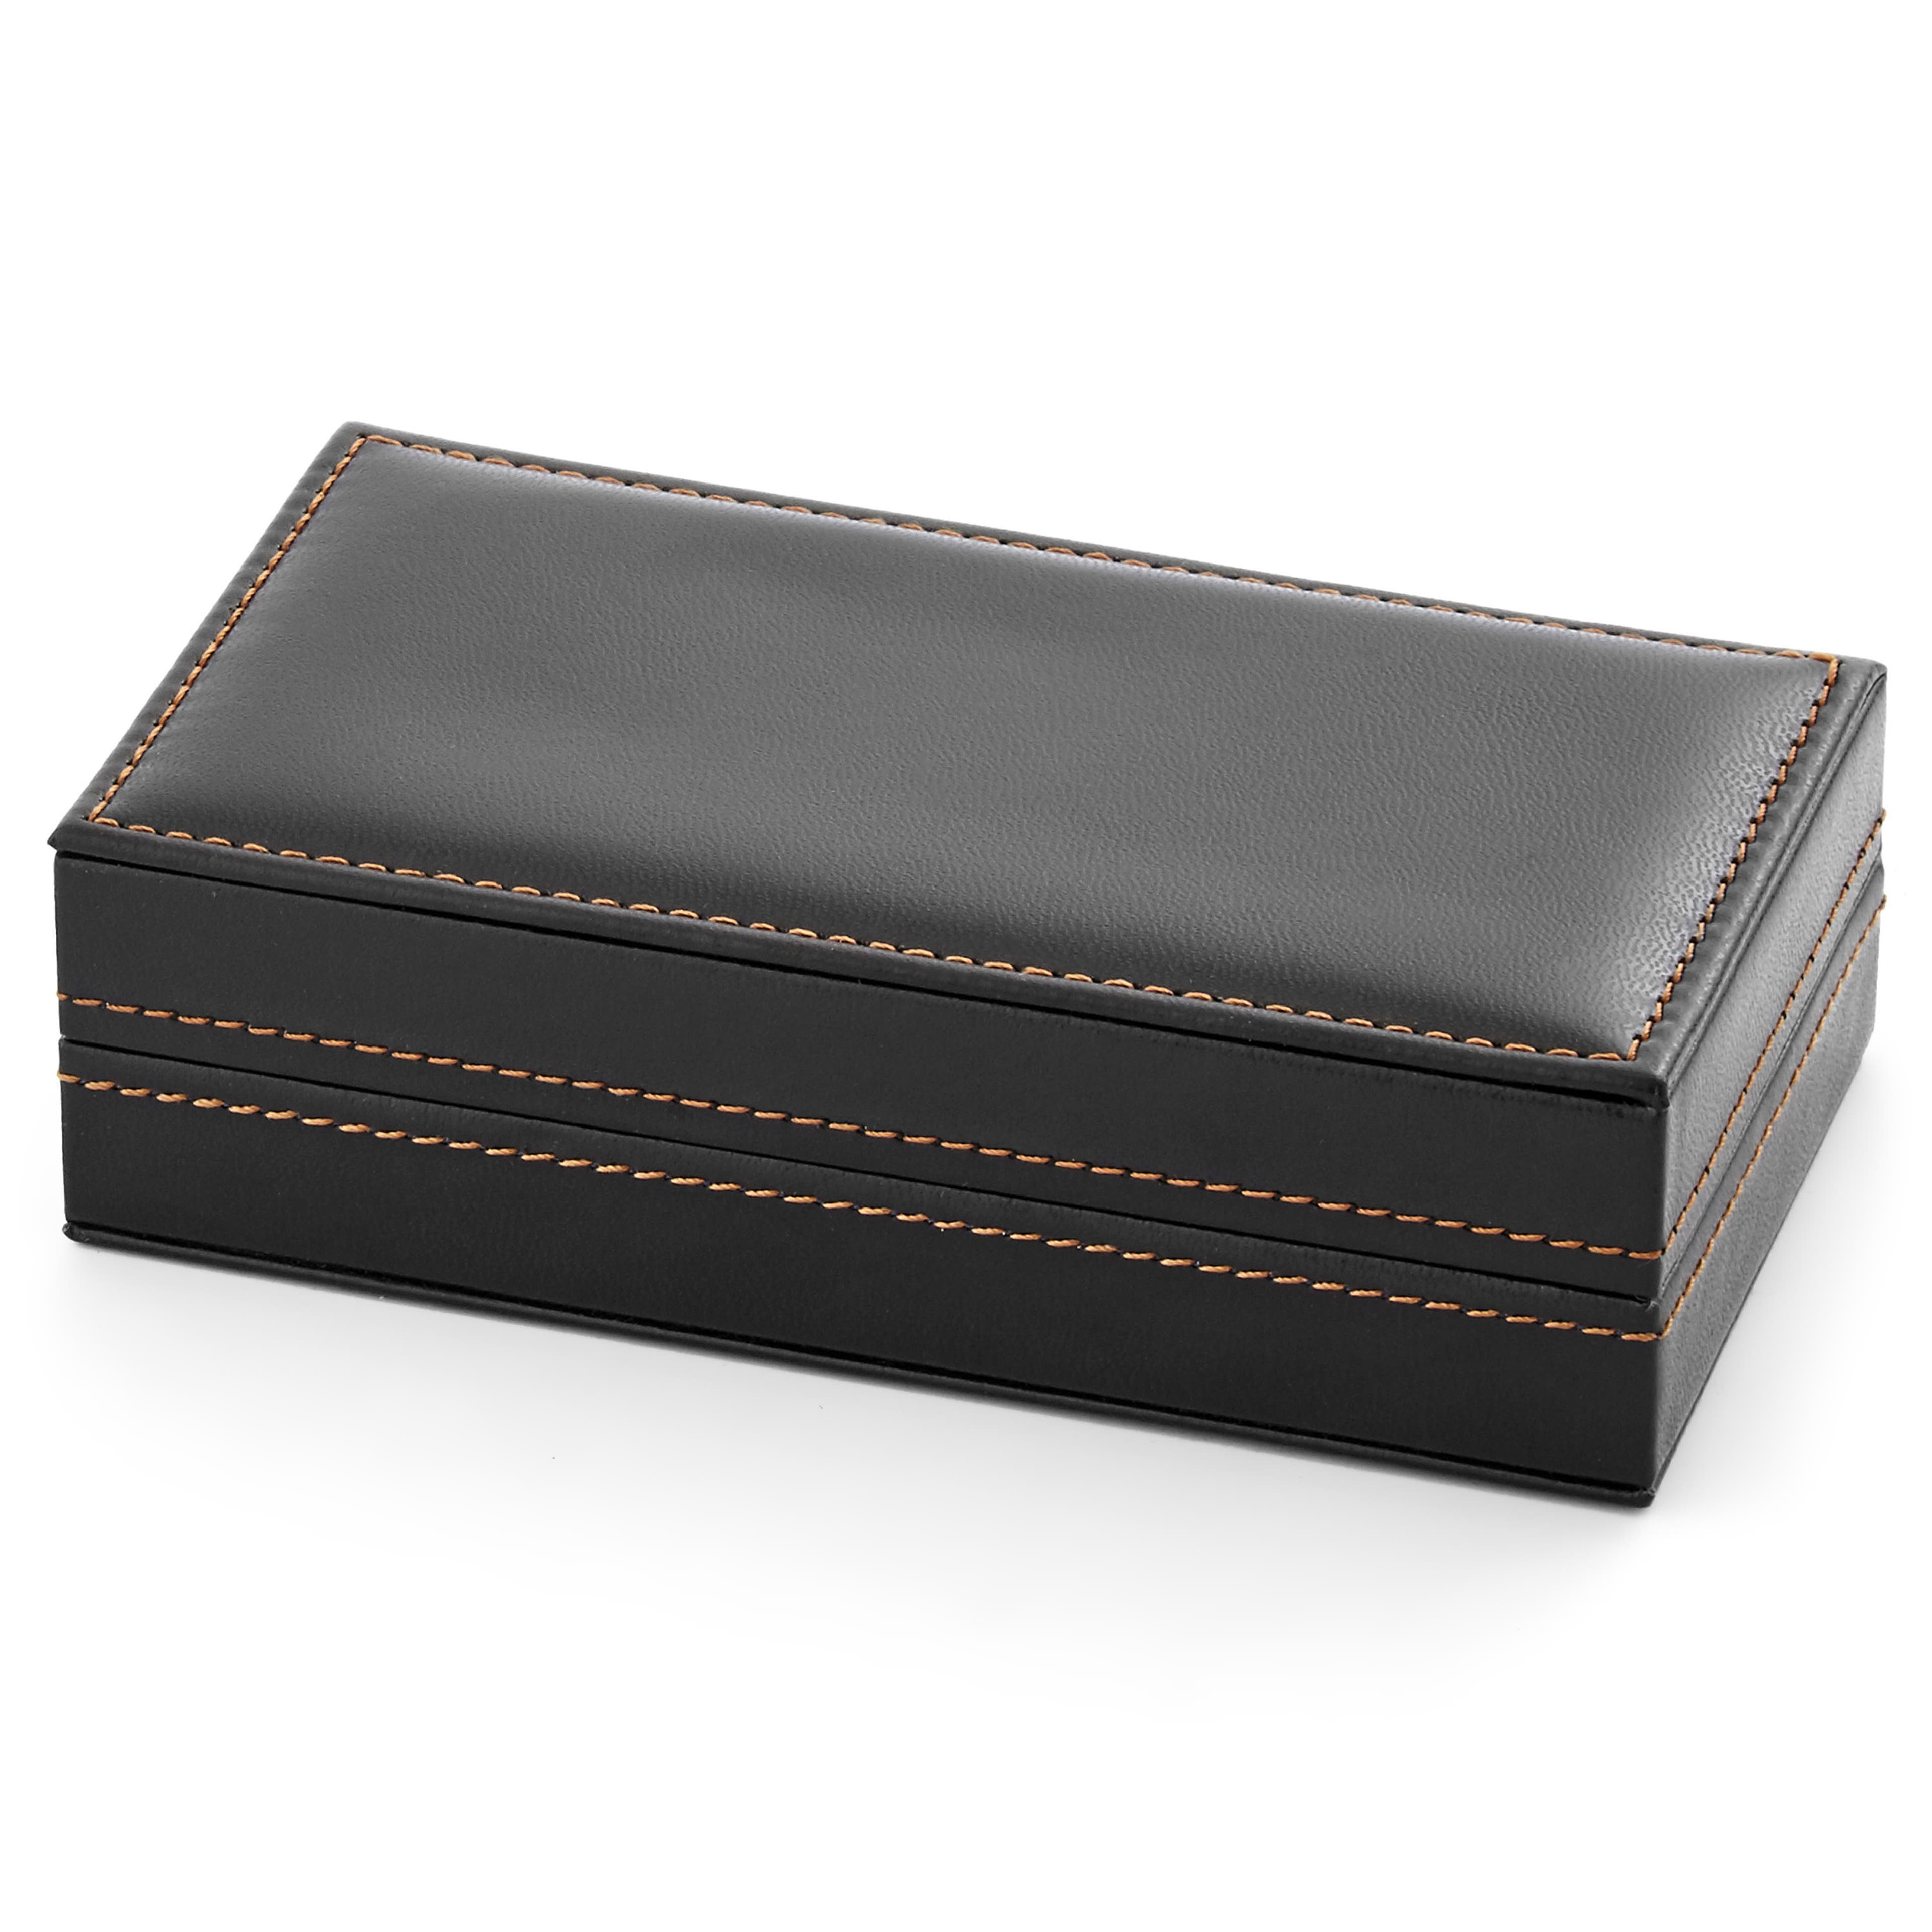 Black PU Leather Cufflinks Box For 4 Cufflink Sets